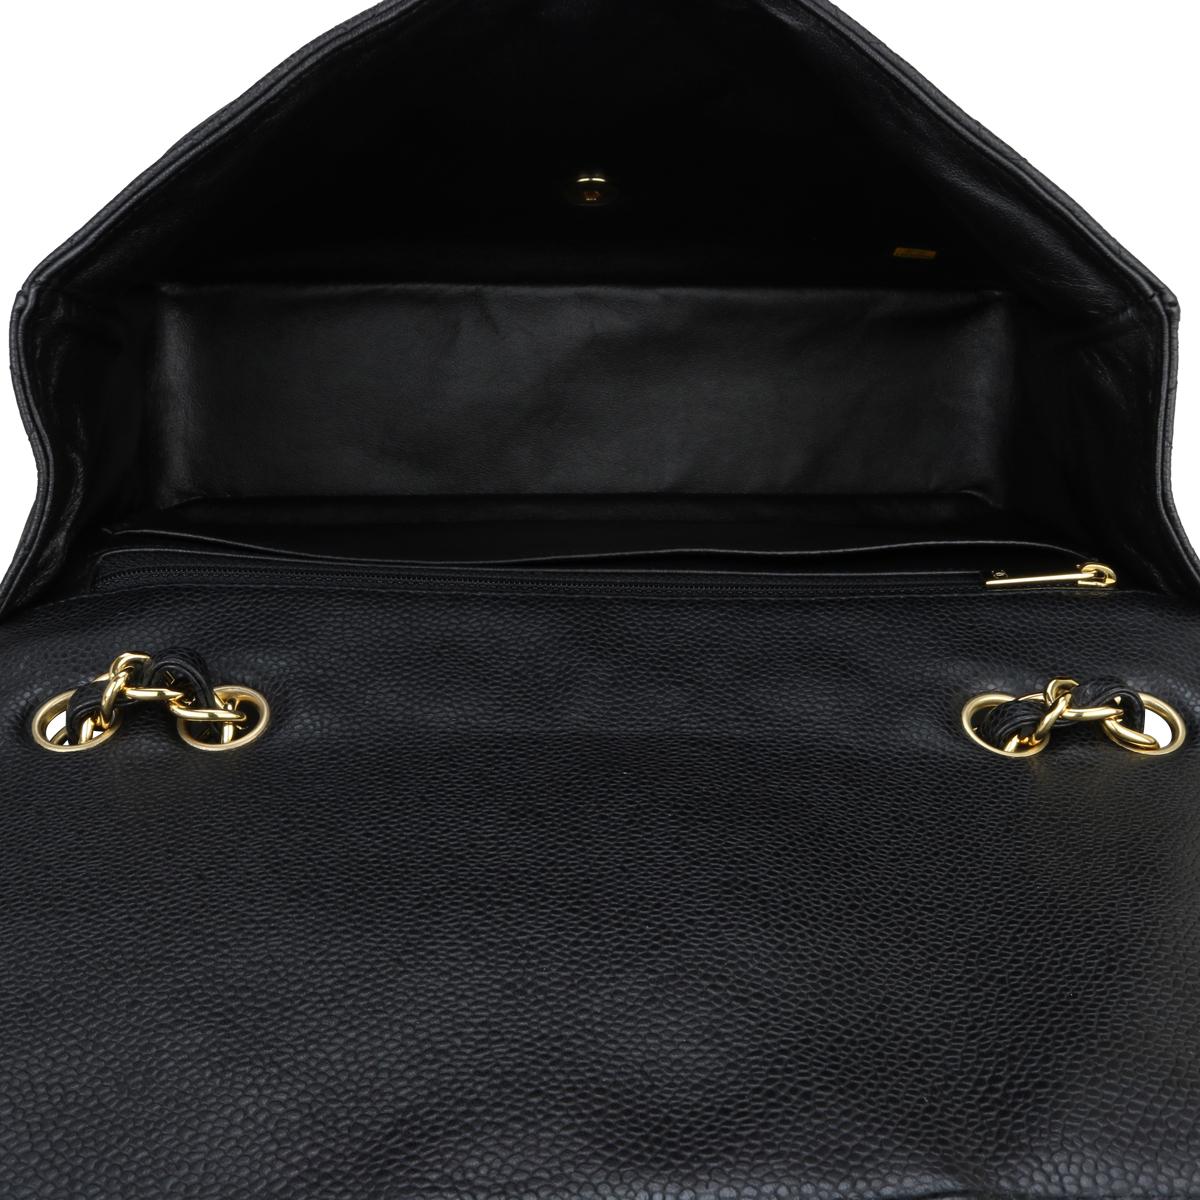 CHANEL Single Flap Jumbo Bag Black Caviar with Gold Hardware 2010 For Sale 11